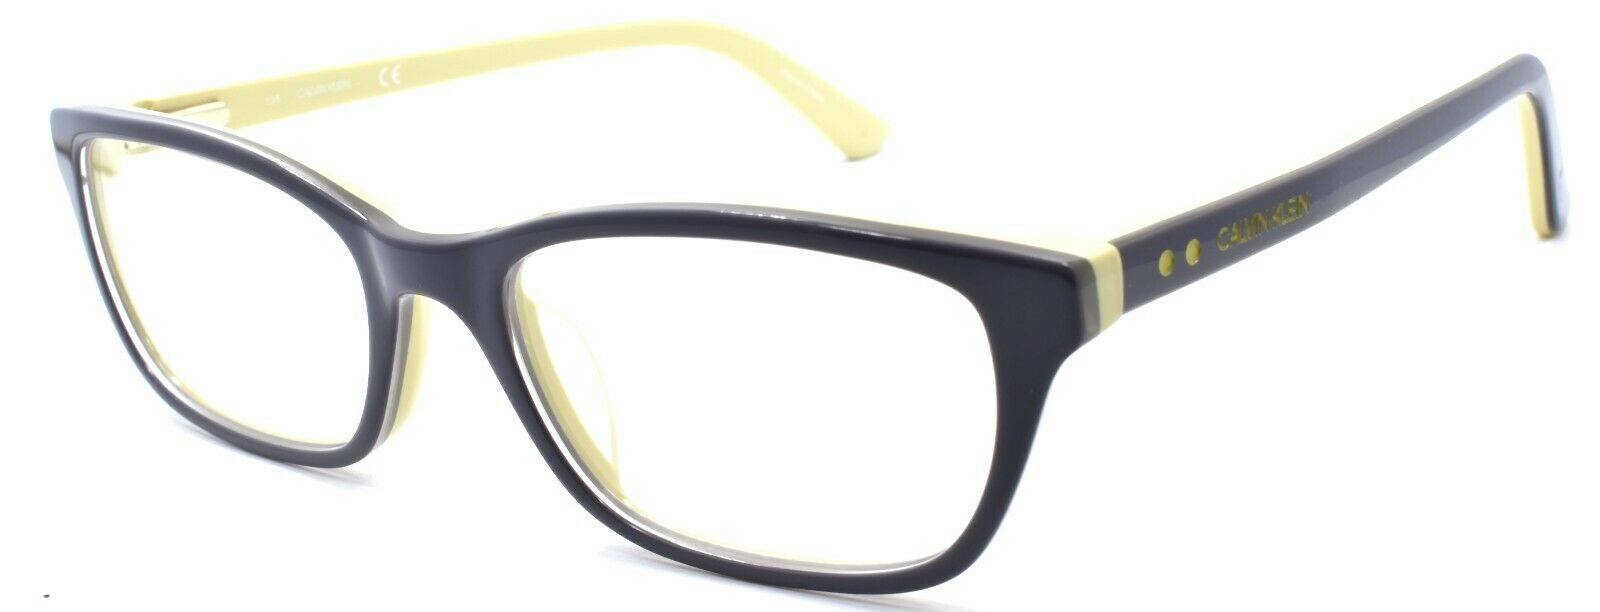 1-Calvin Klein CK18541 031 Women's Eyeglasses Frames 50-17-135 Slate / Yellow-883901105124-IKSpecs